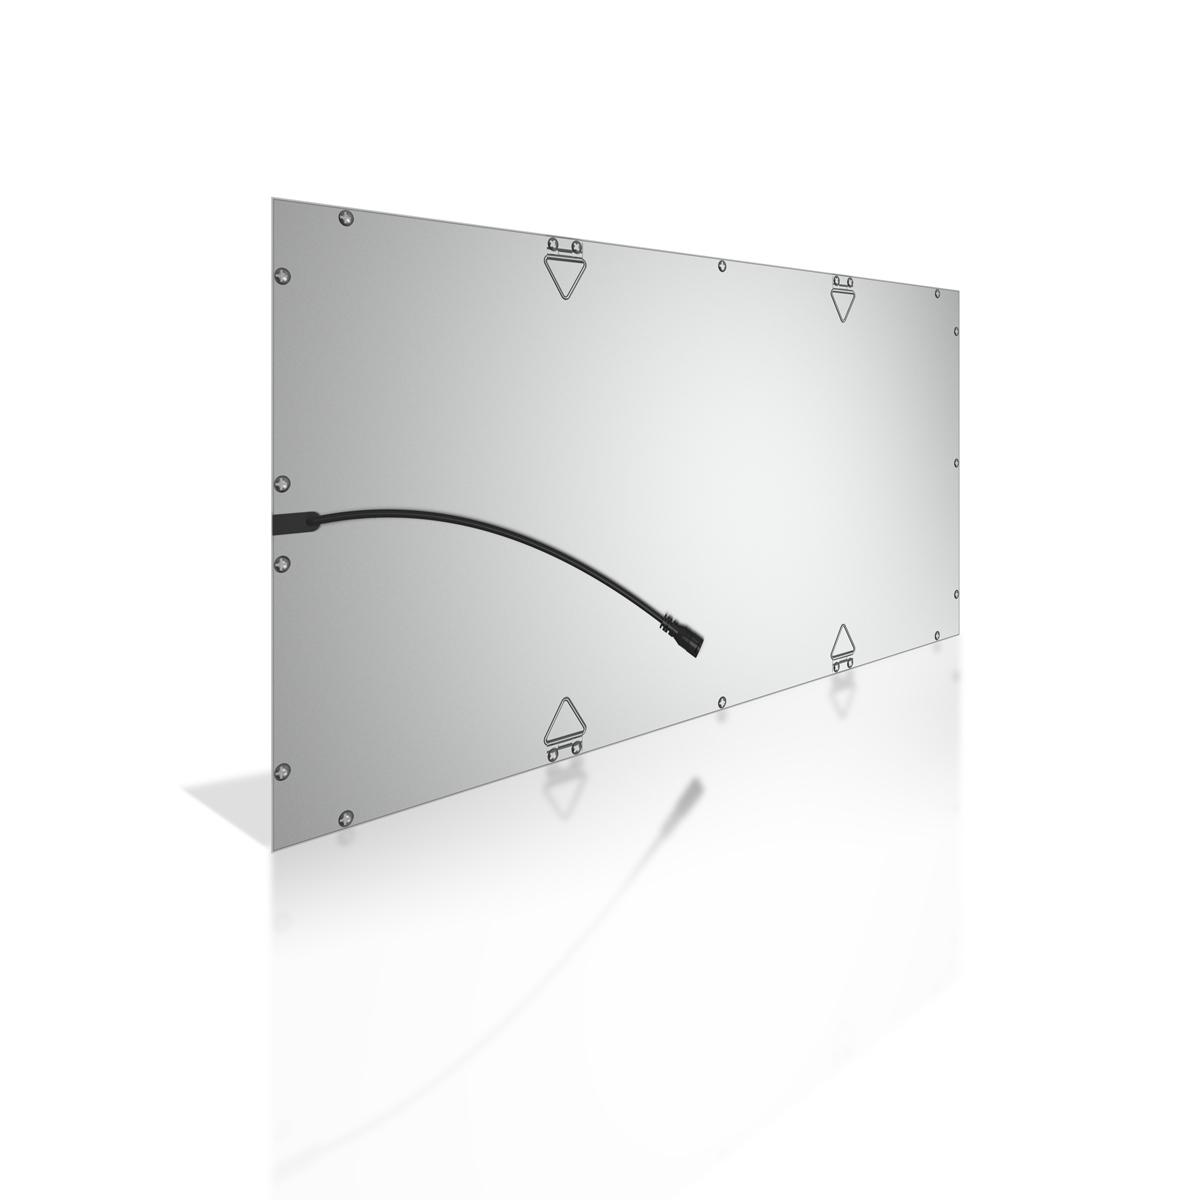 LED Panel 60x30cm 24W Rahmen silbern - Lichtfarbe: Kaltweiß 5500K